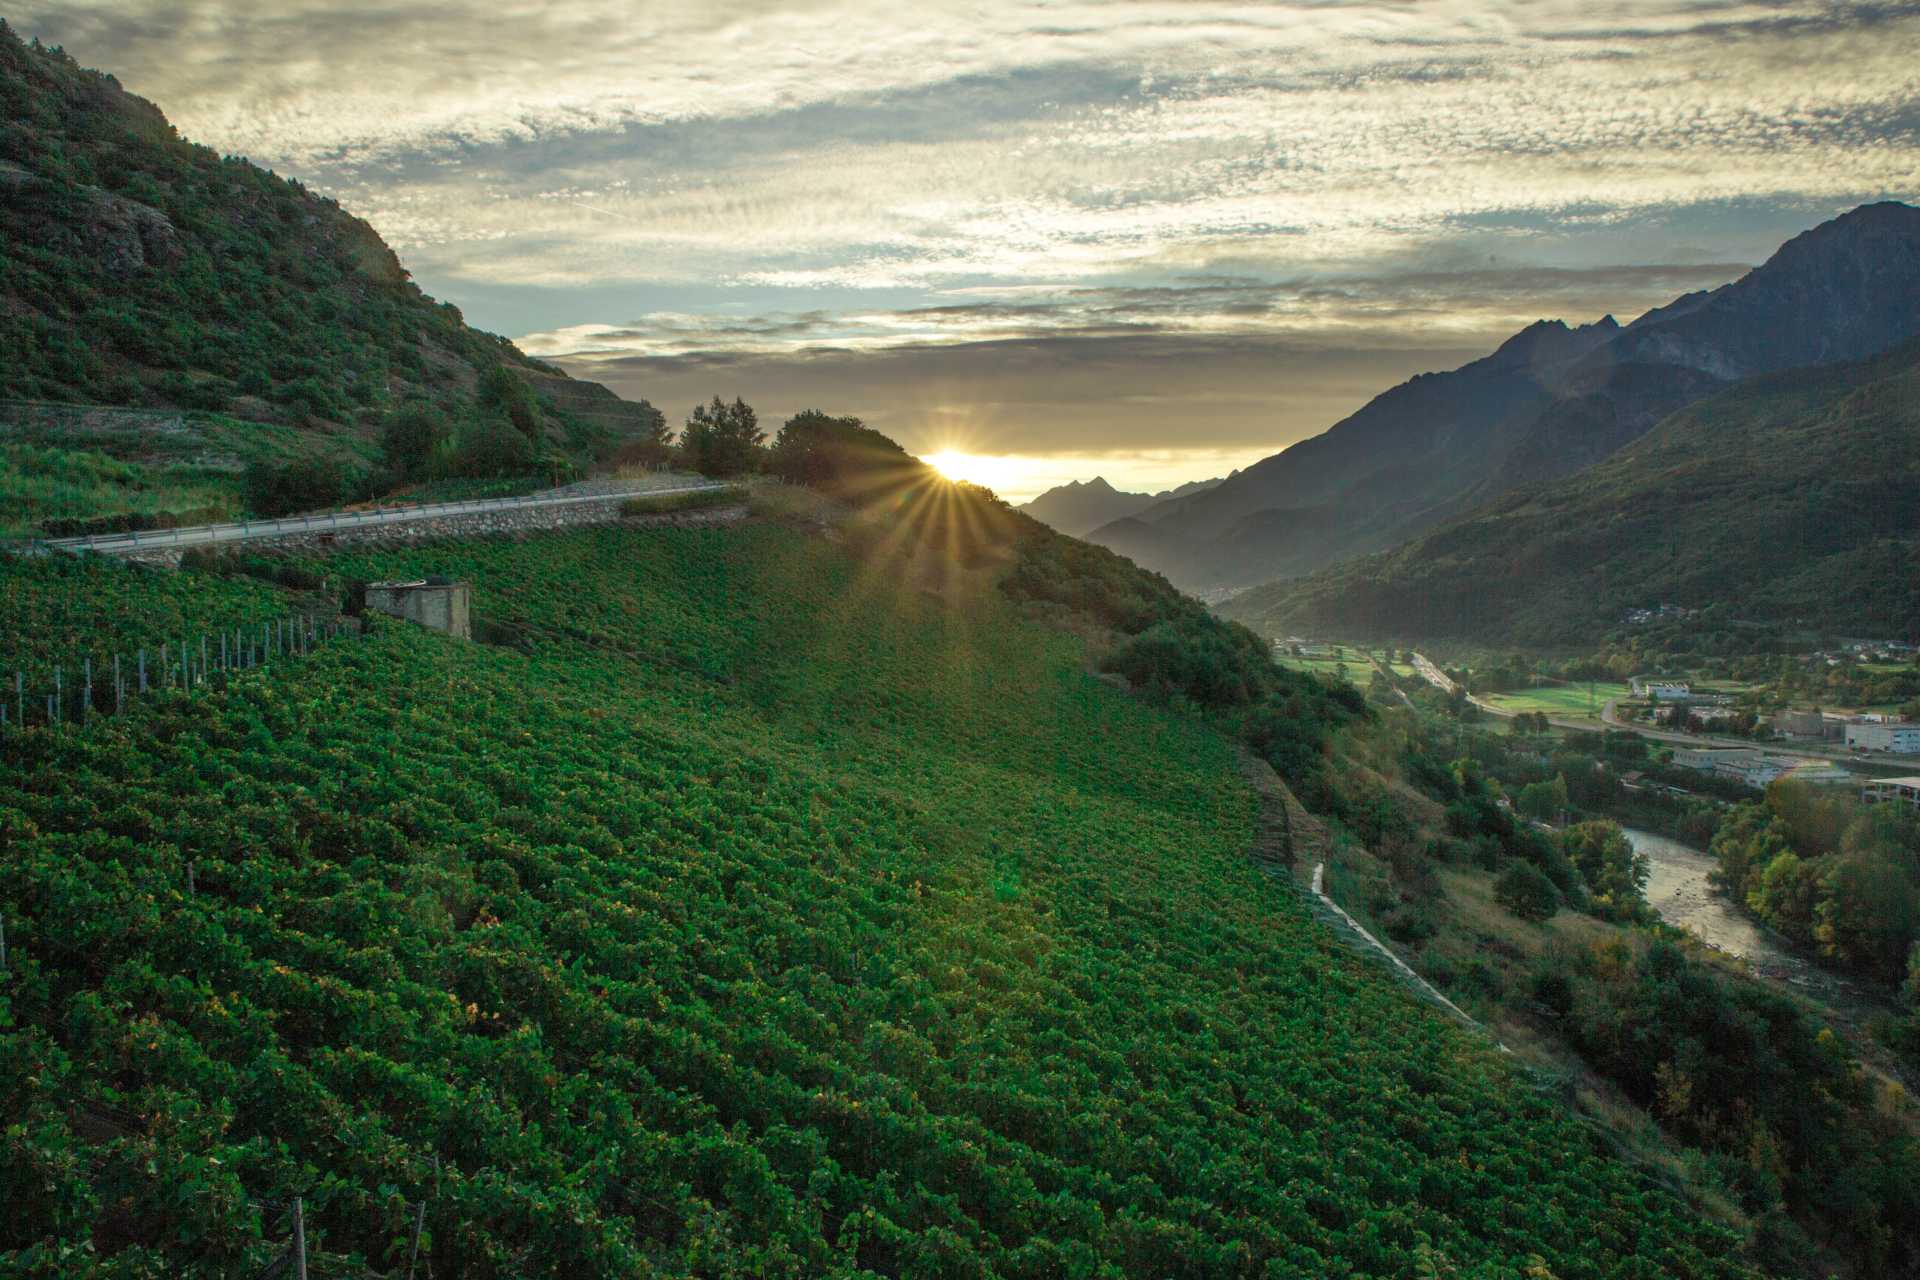 Vigne Lo Triolet a Nus - Consorzio Vini Valle d'Aosta